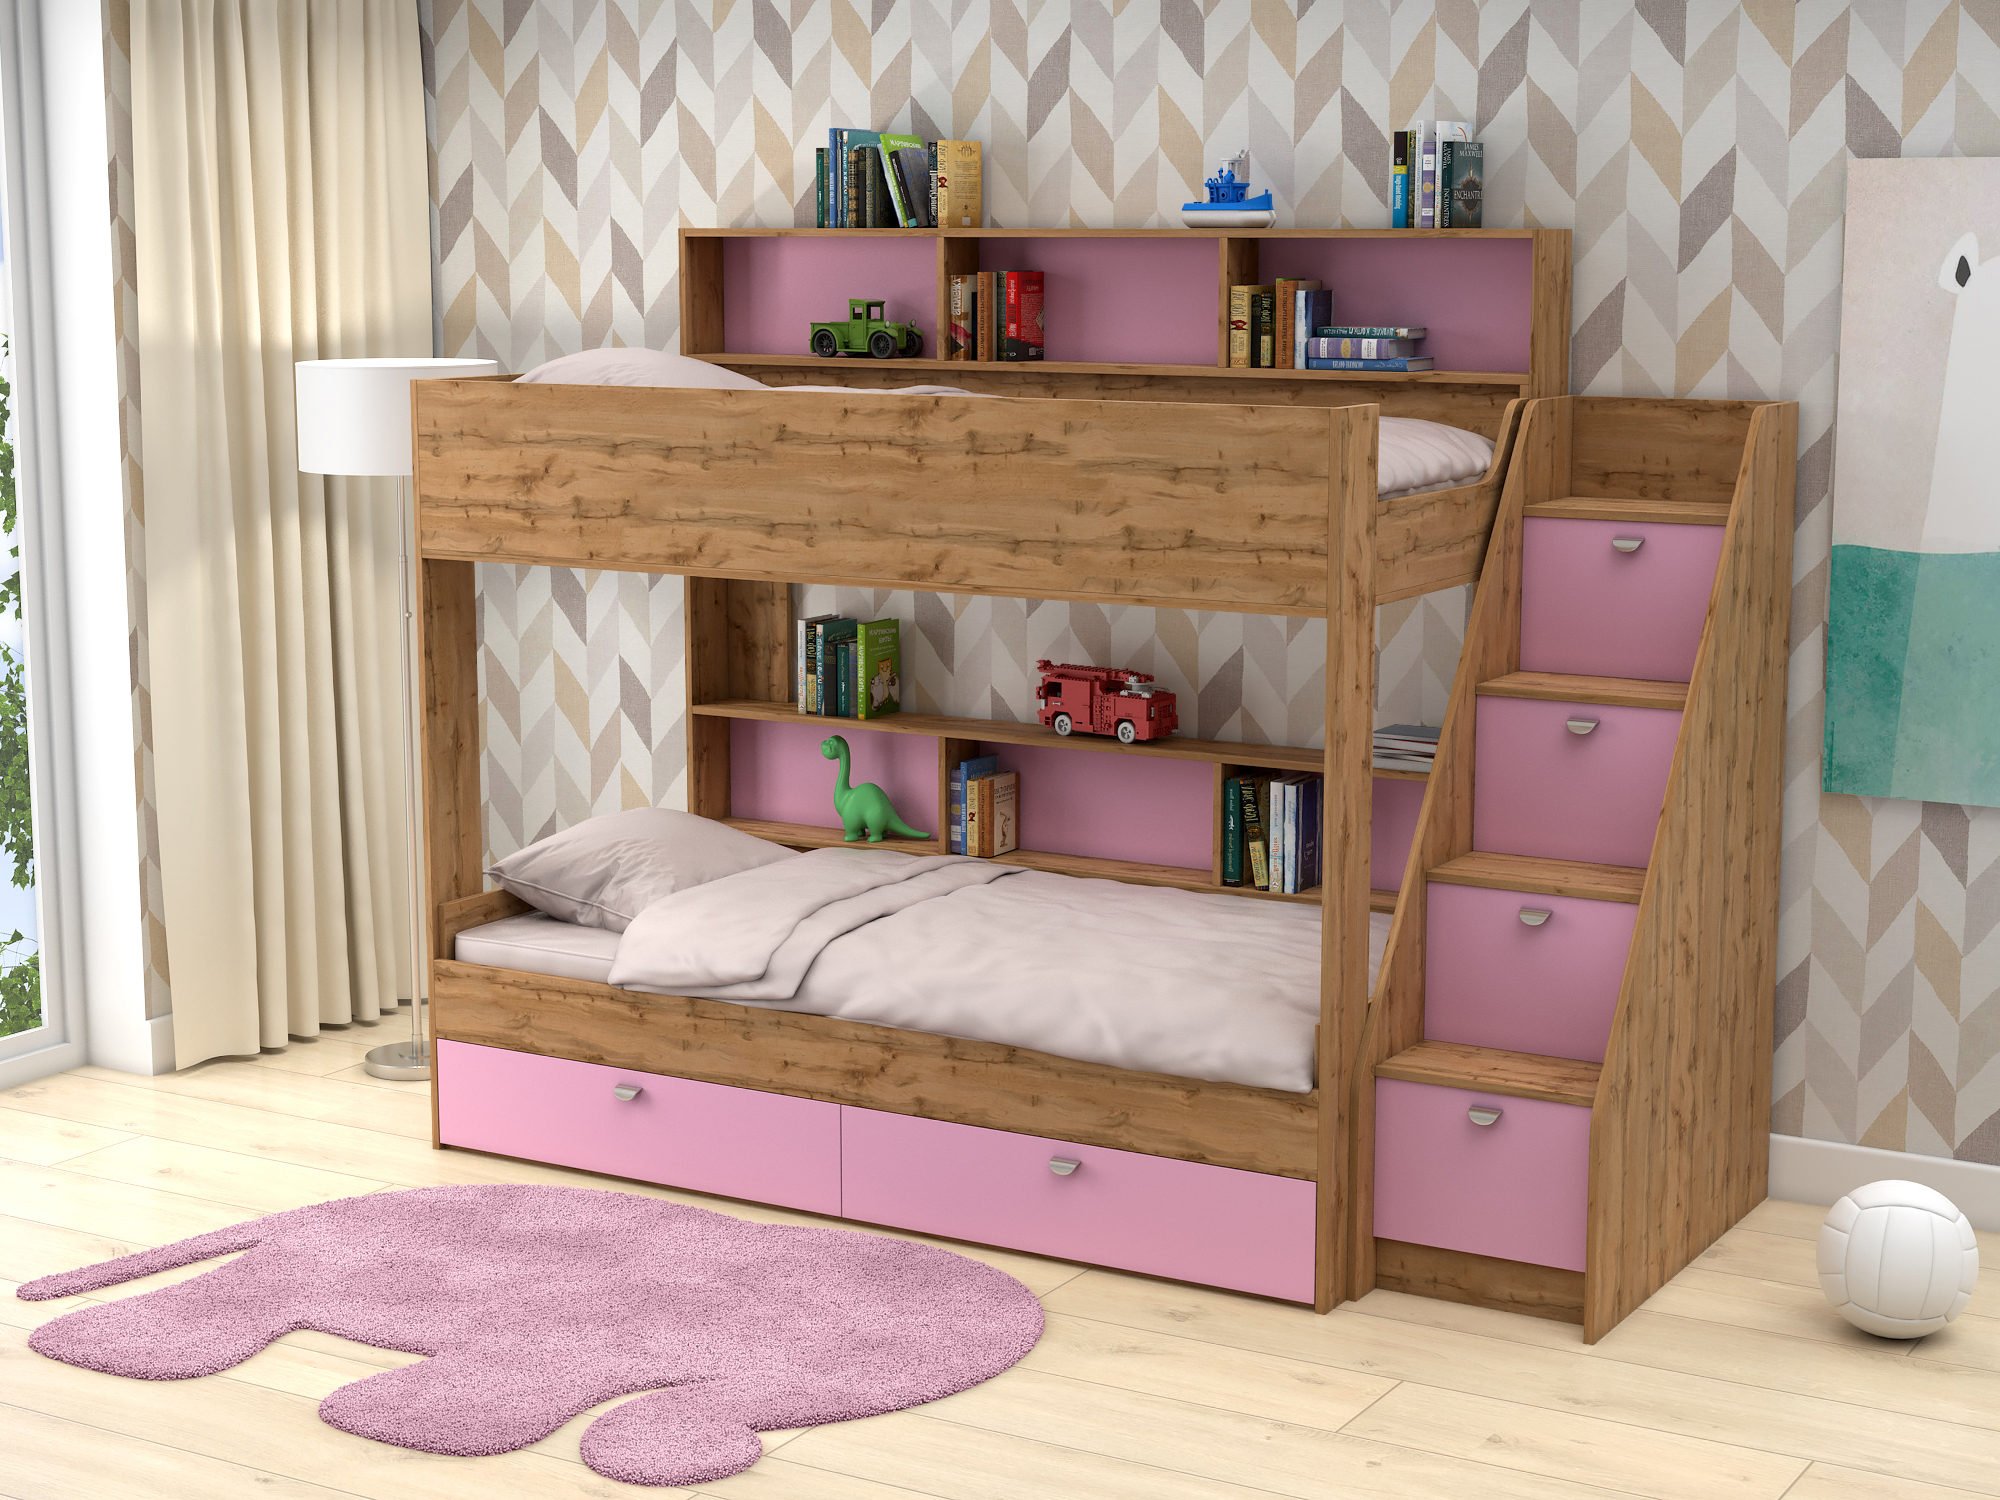 Двухъярусная кровать Golden Kids 10 (90х190) Розовый, Бежевый, ЛДСП двухъярусная кровать golden kids 10 90х190 розовый белый бежевый лдсп